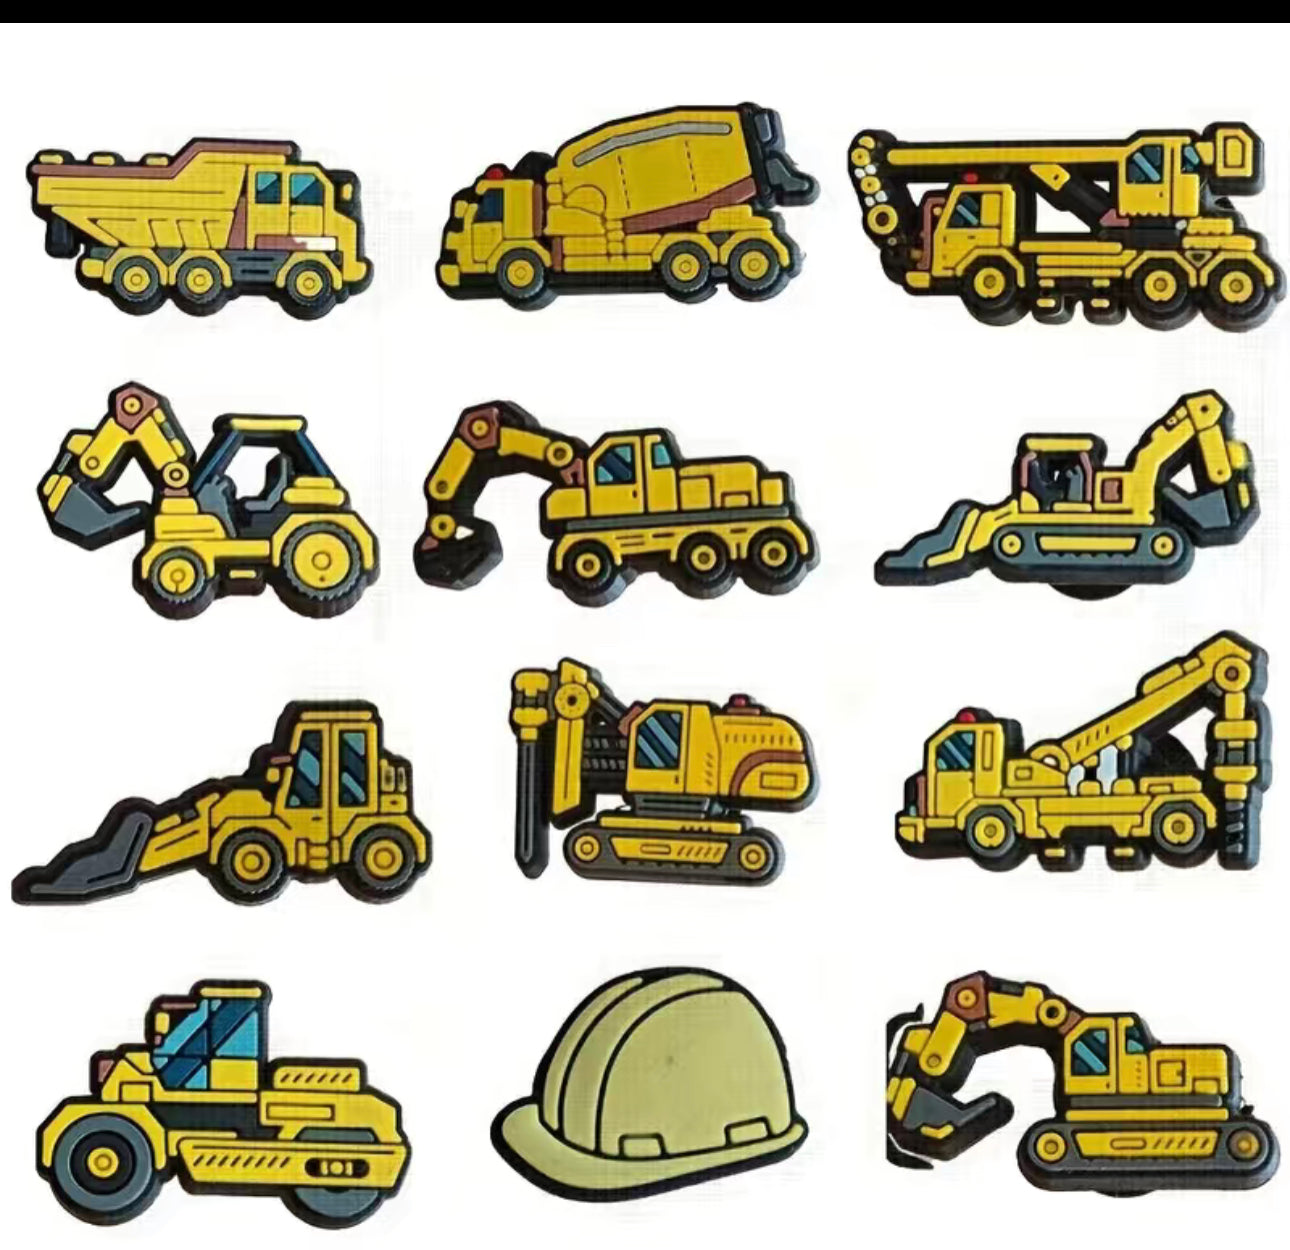 Construction trucks croc charms